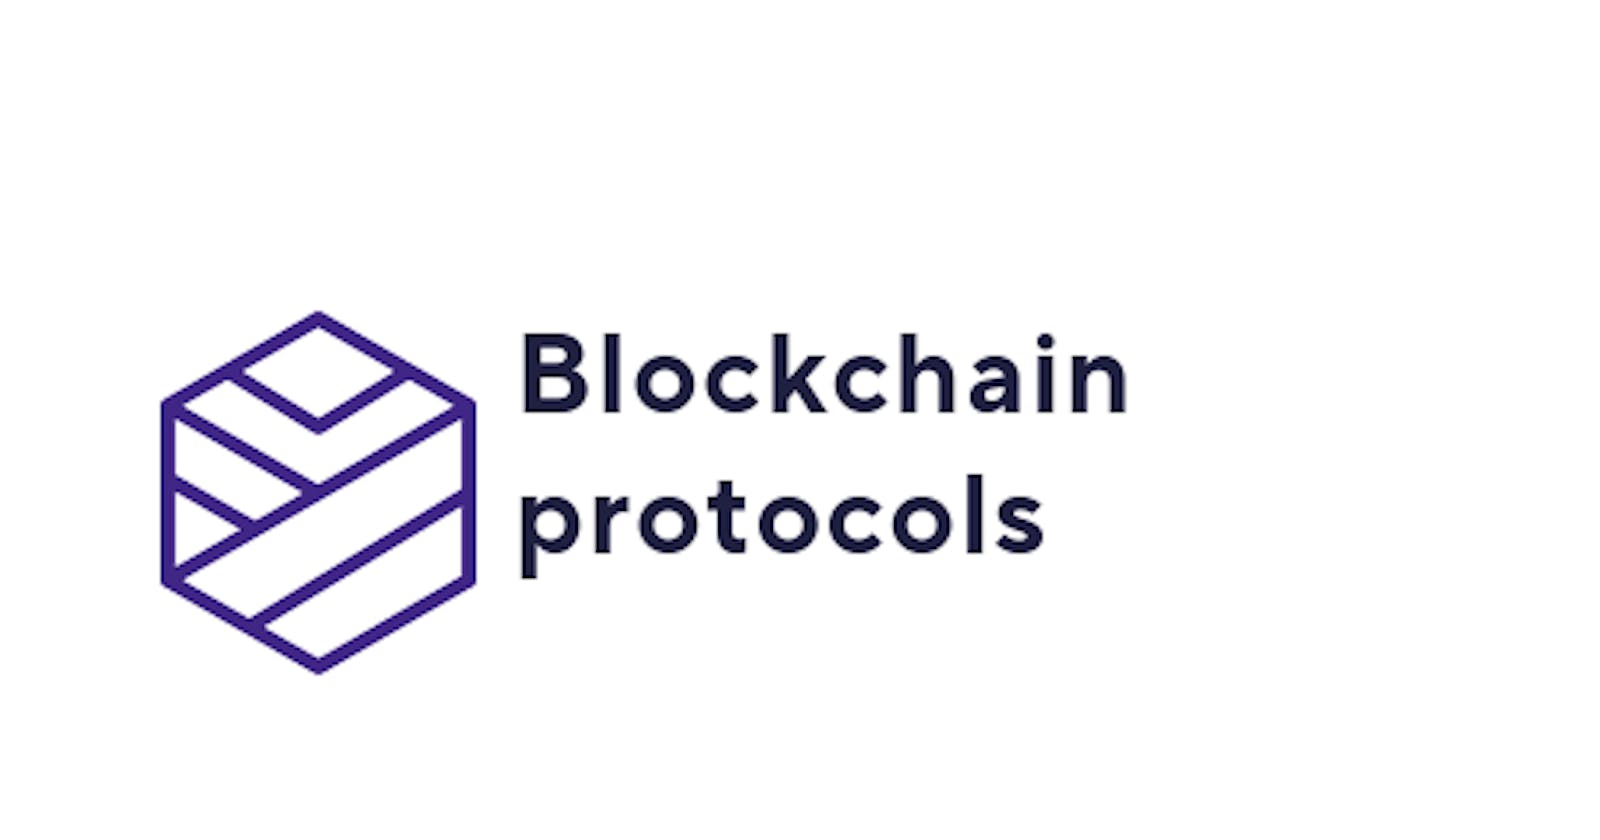 Deep dive into Blockchain protocols